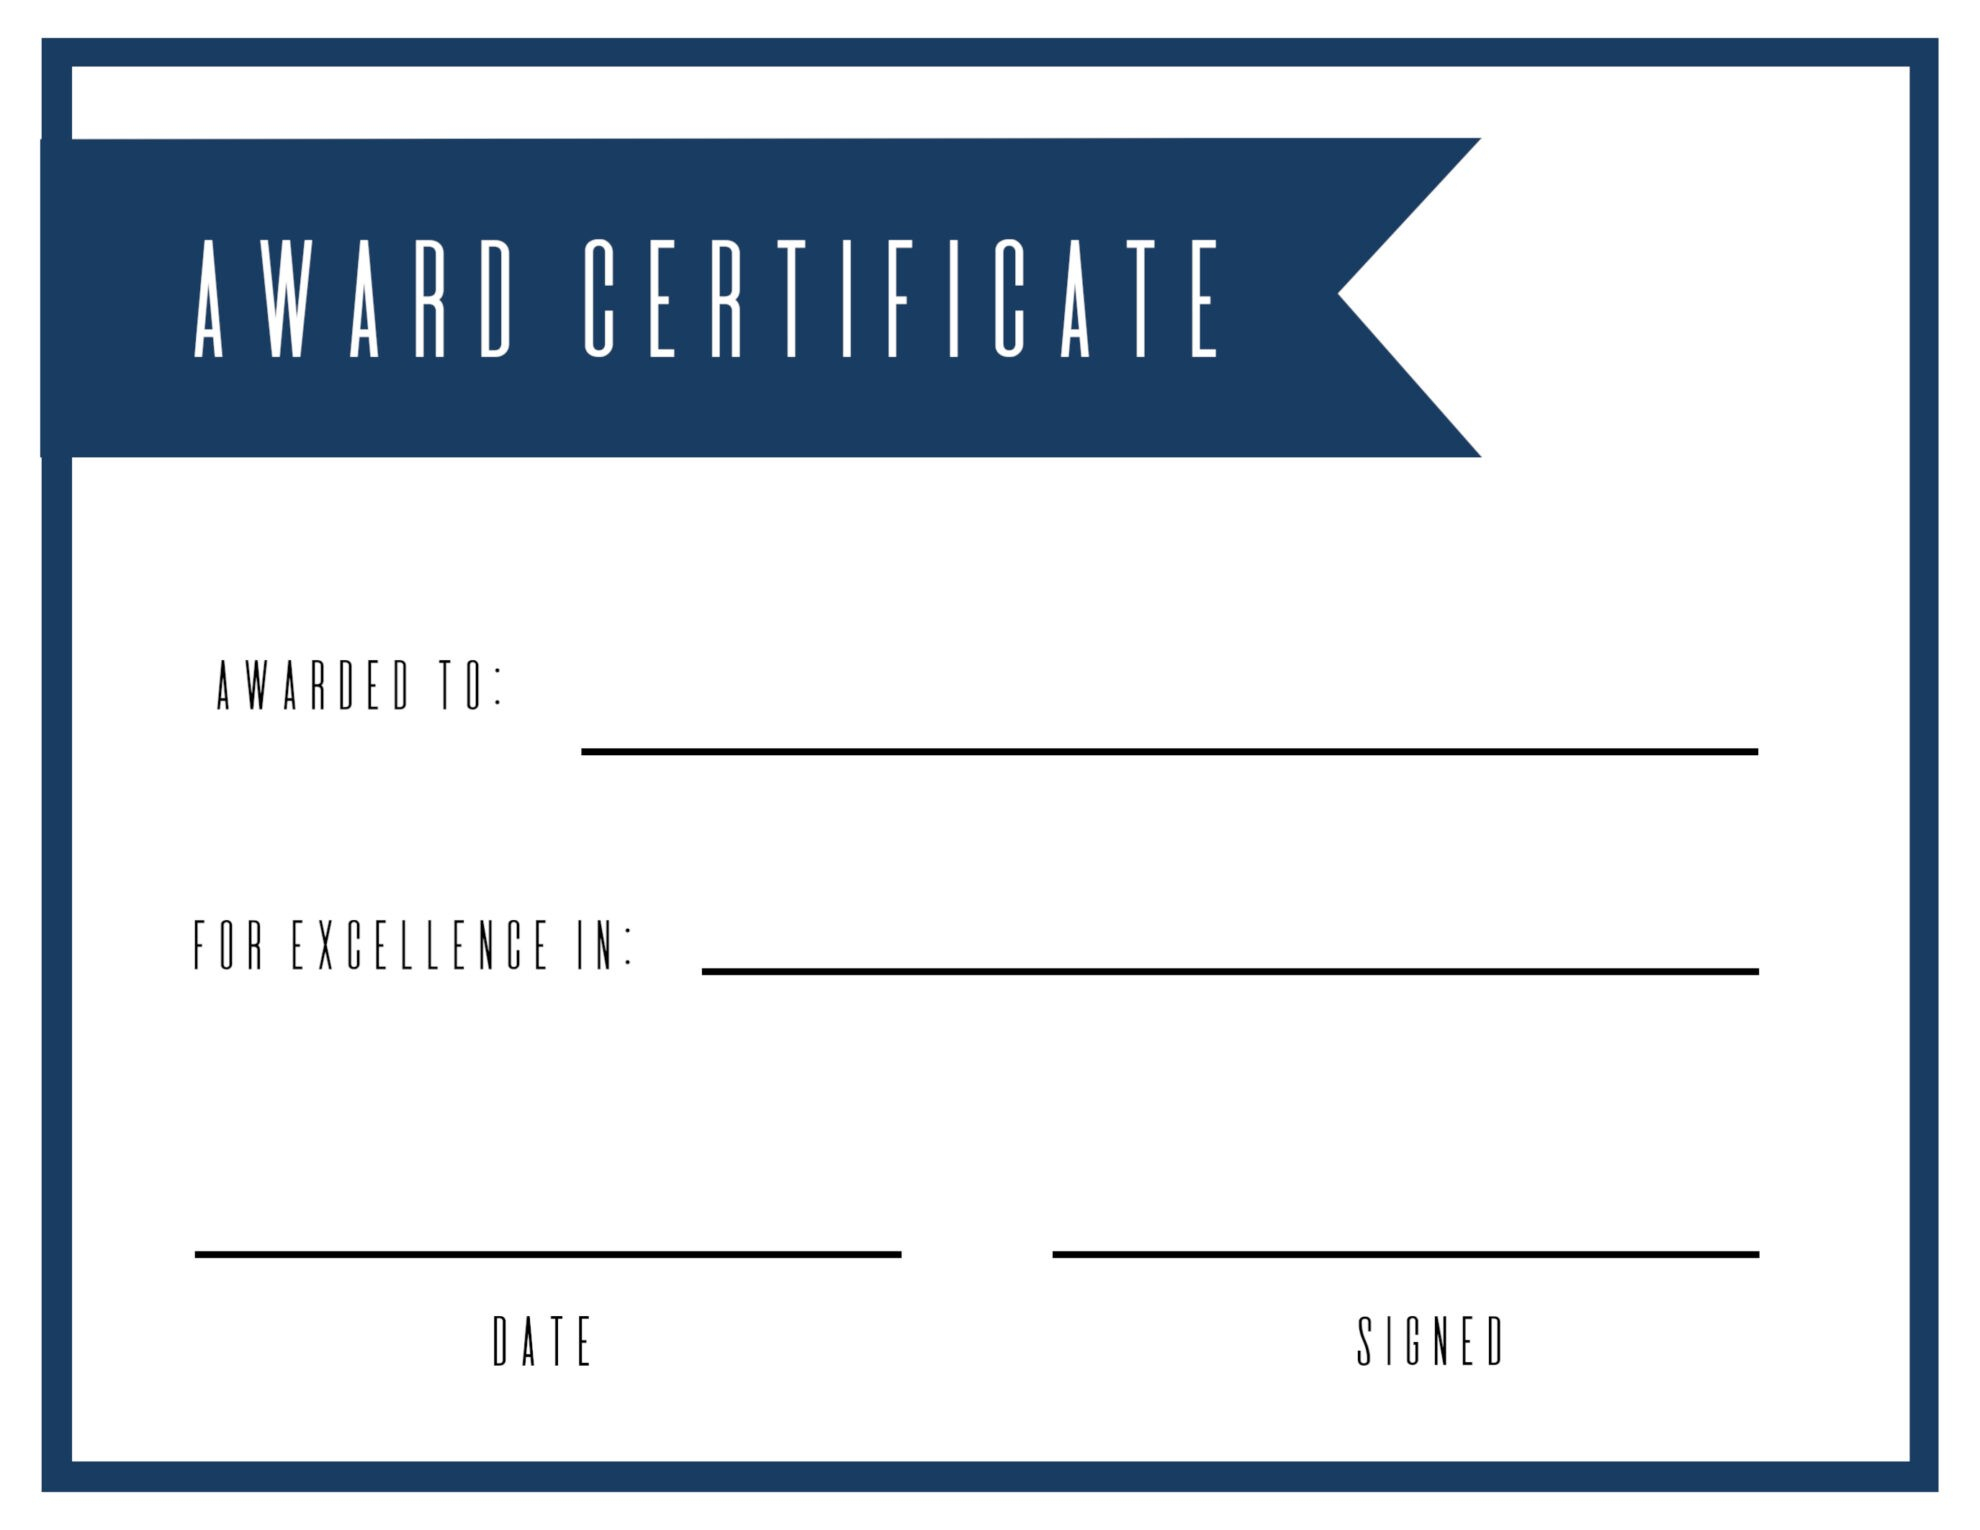 Certificates. Outstanding Blank Award Certificate Template Inside Award Certificate Template Powerpoint